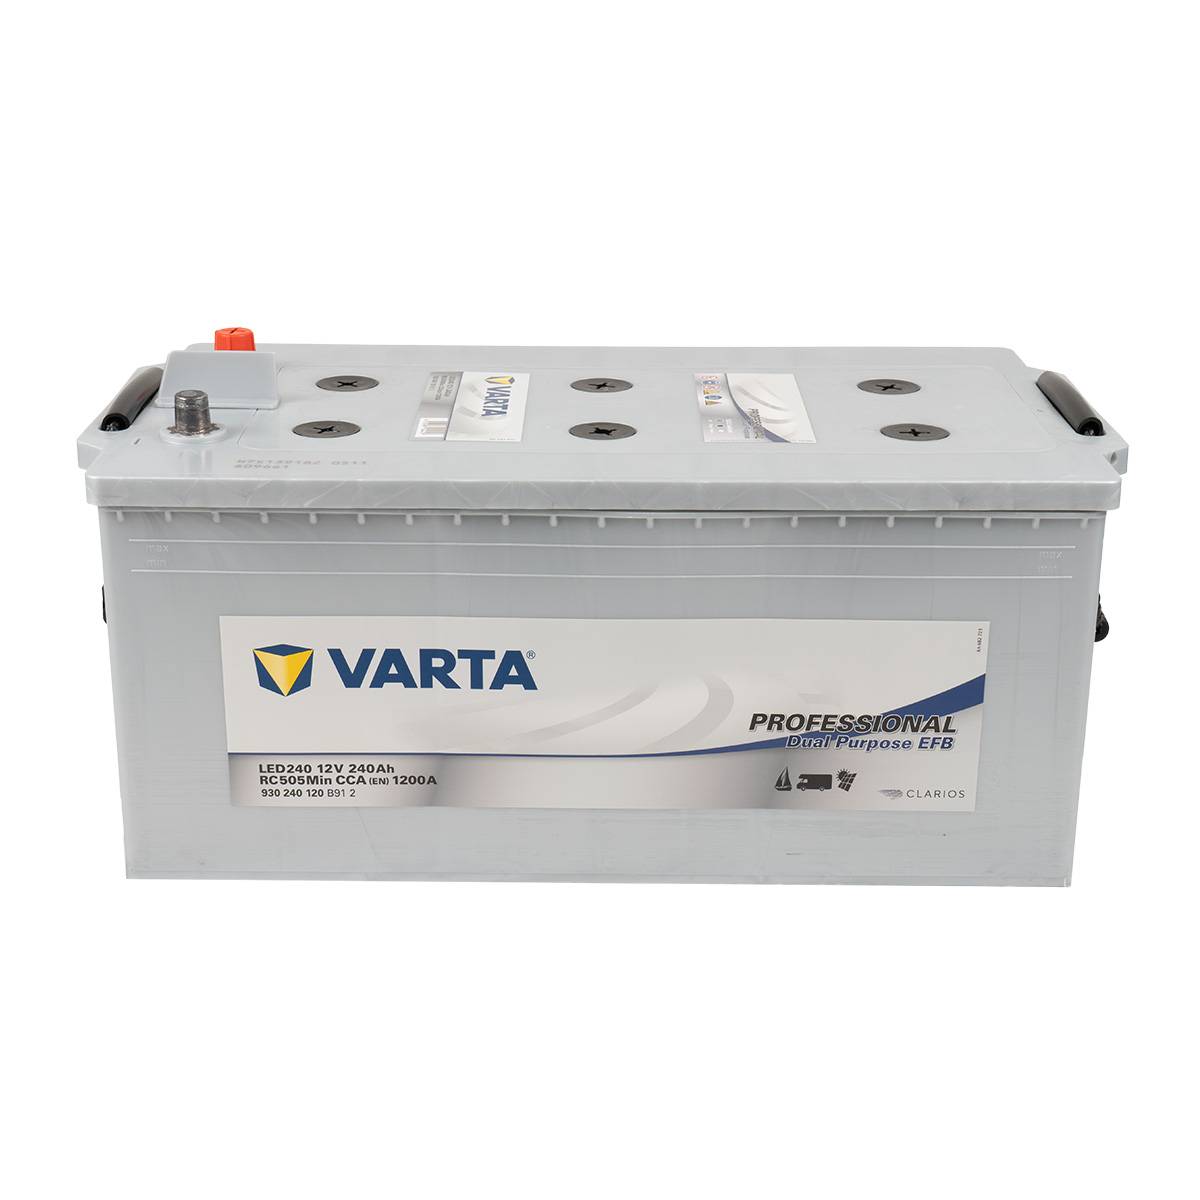 Varta LED240 Professional EFB 12V 240Ah 1200A 930 240 120, Versorgungsbatterie, Caravan, Batterien für